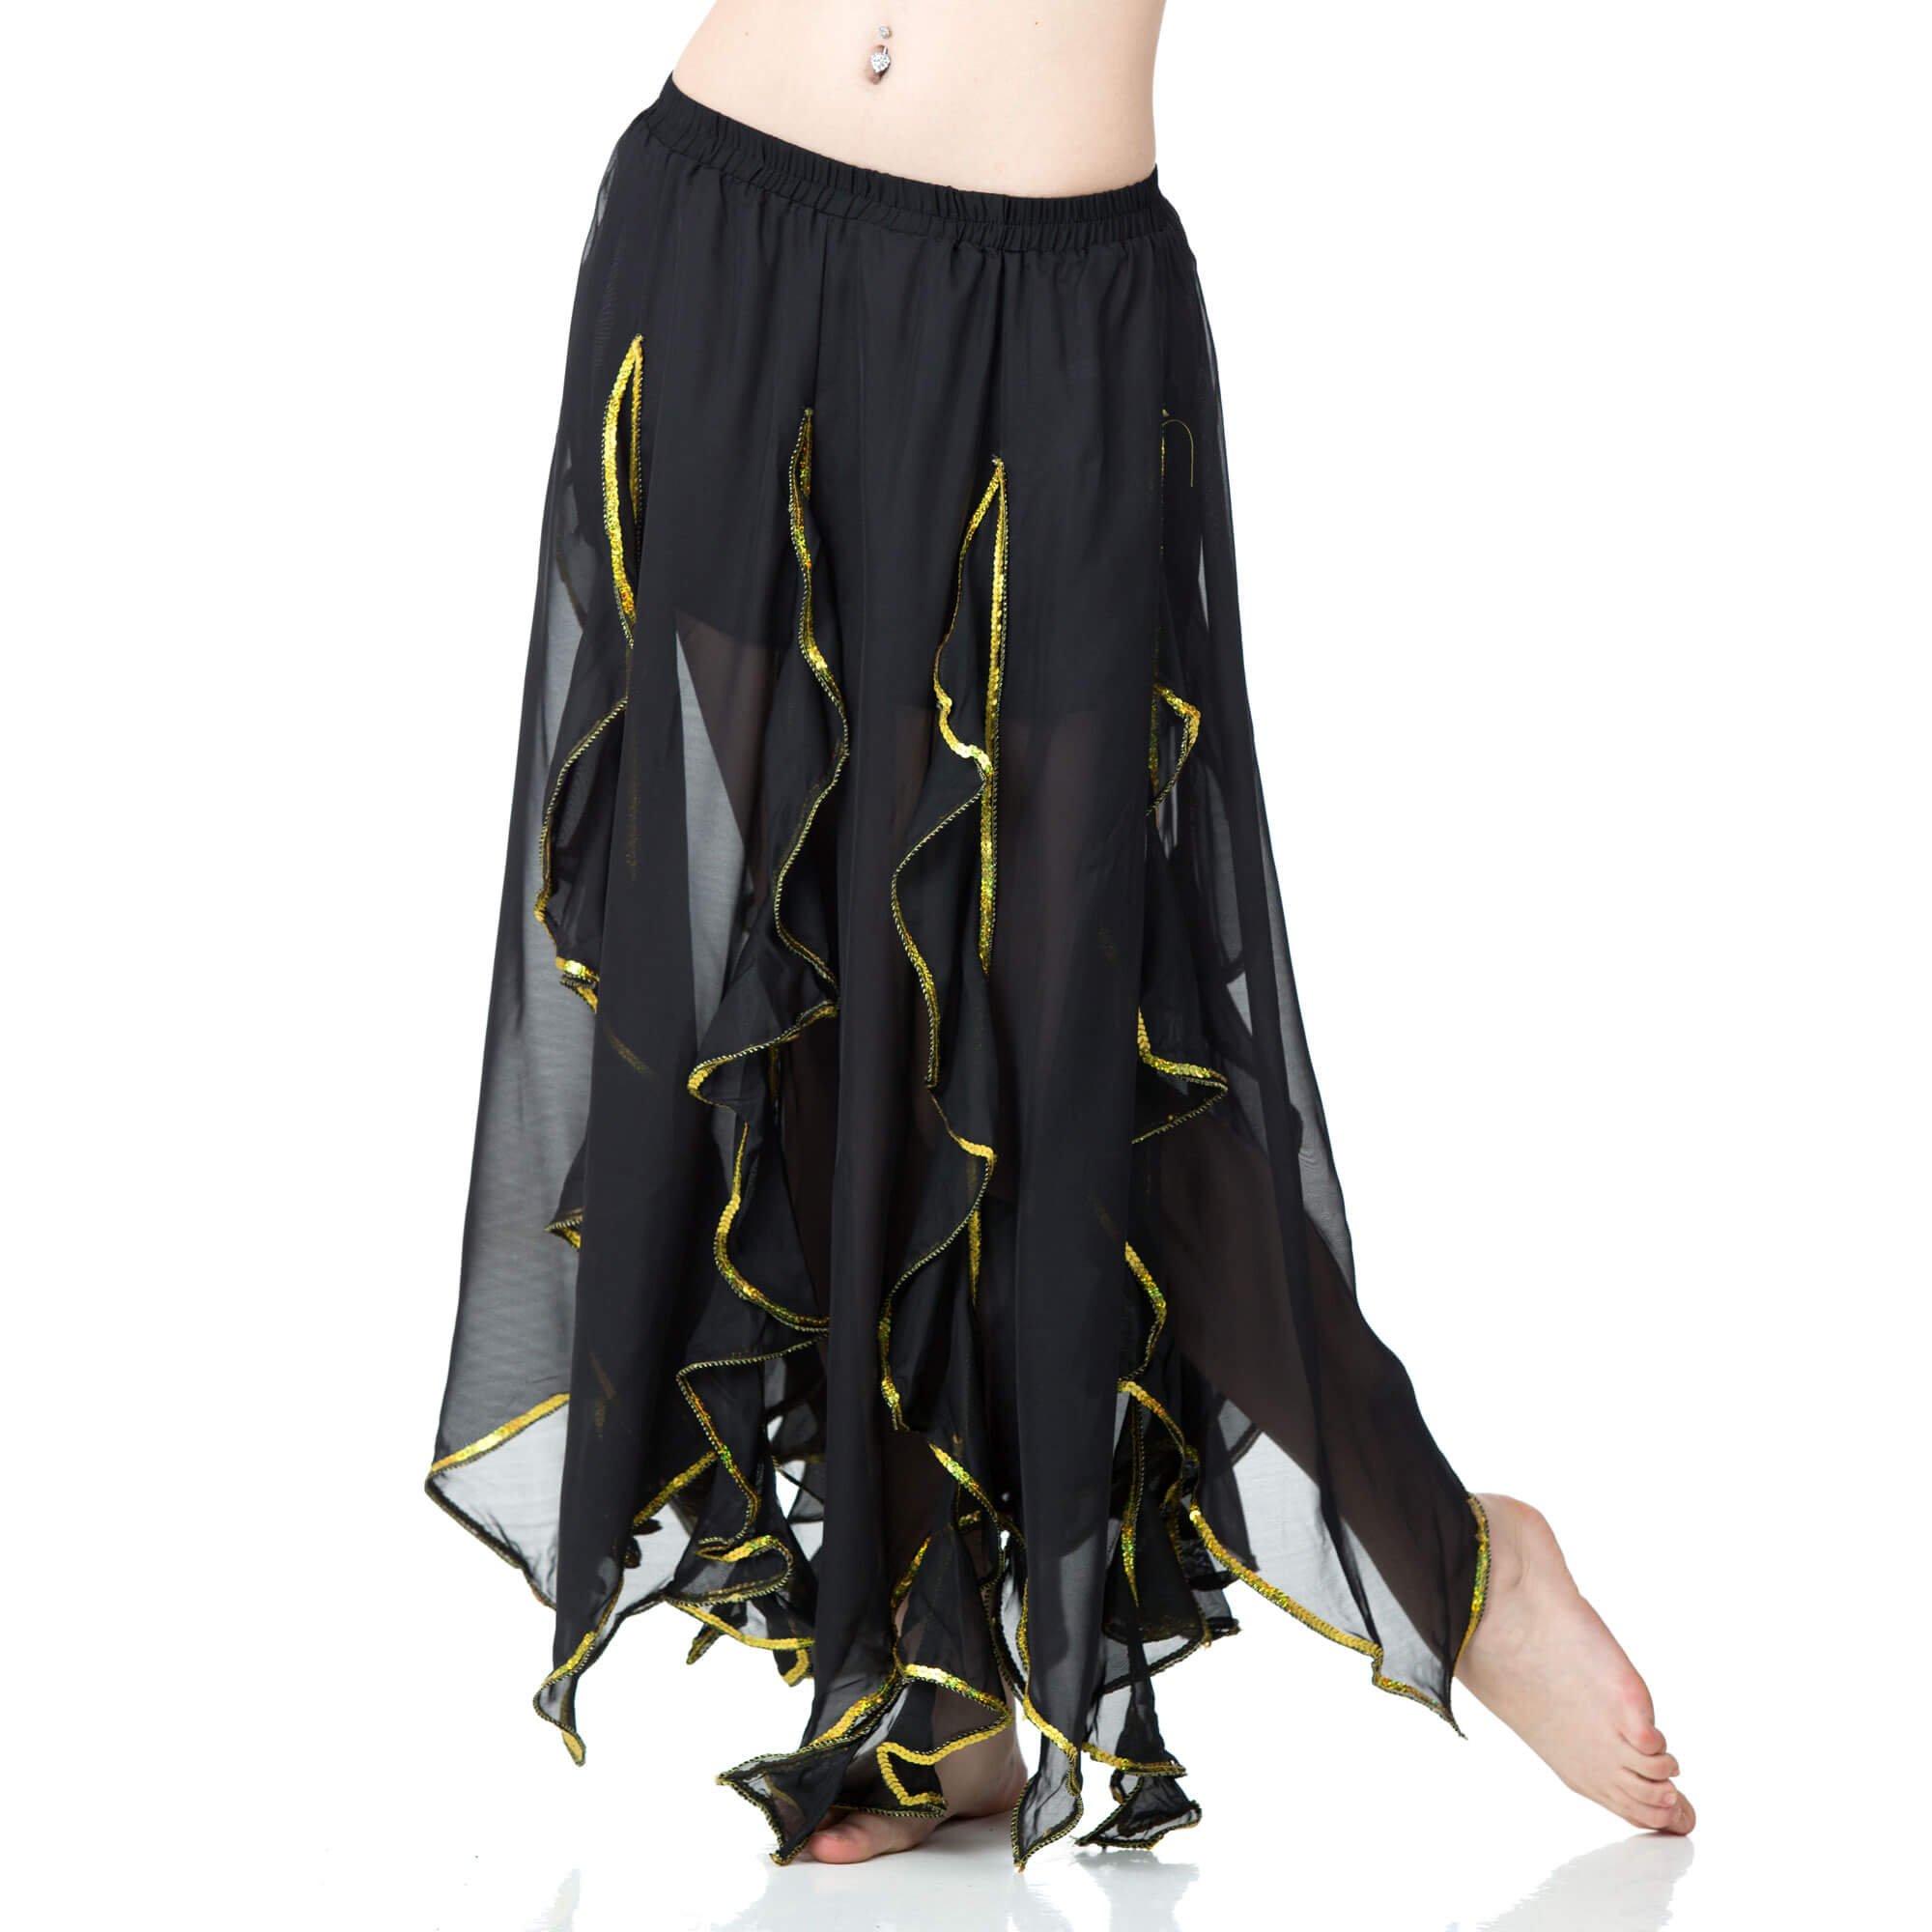 Danzcue Adult Belly Side Split Chiffon Skirt